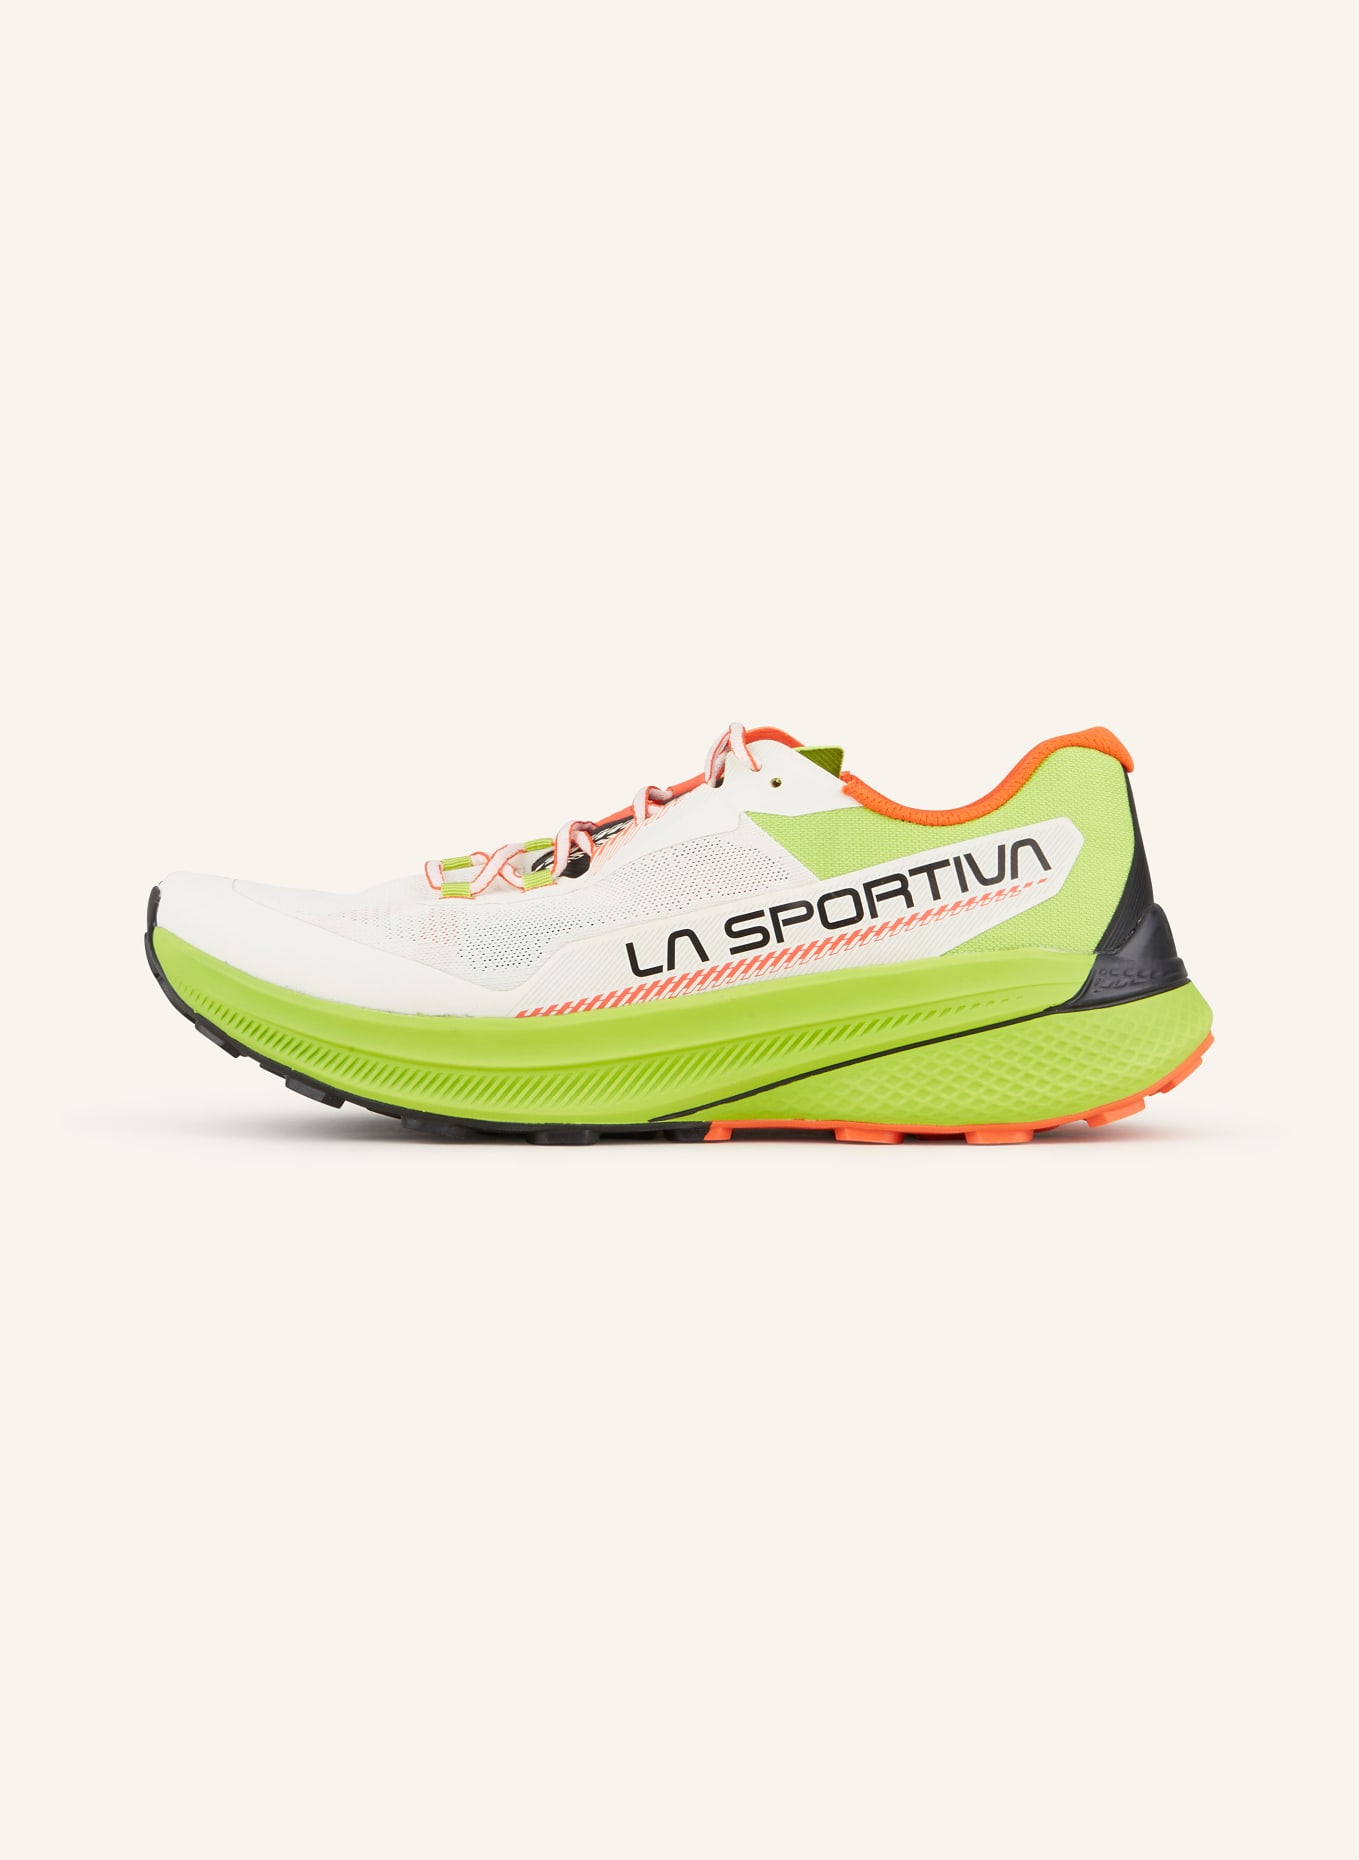 LA SPORTIVA Trailrunning-Schuhe PRODIGIO, Farbe: WEISS/ HELLGRÜN/ ORANGE (Bild 4)